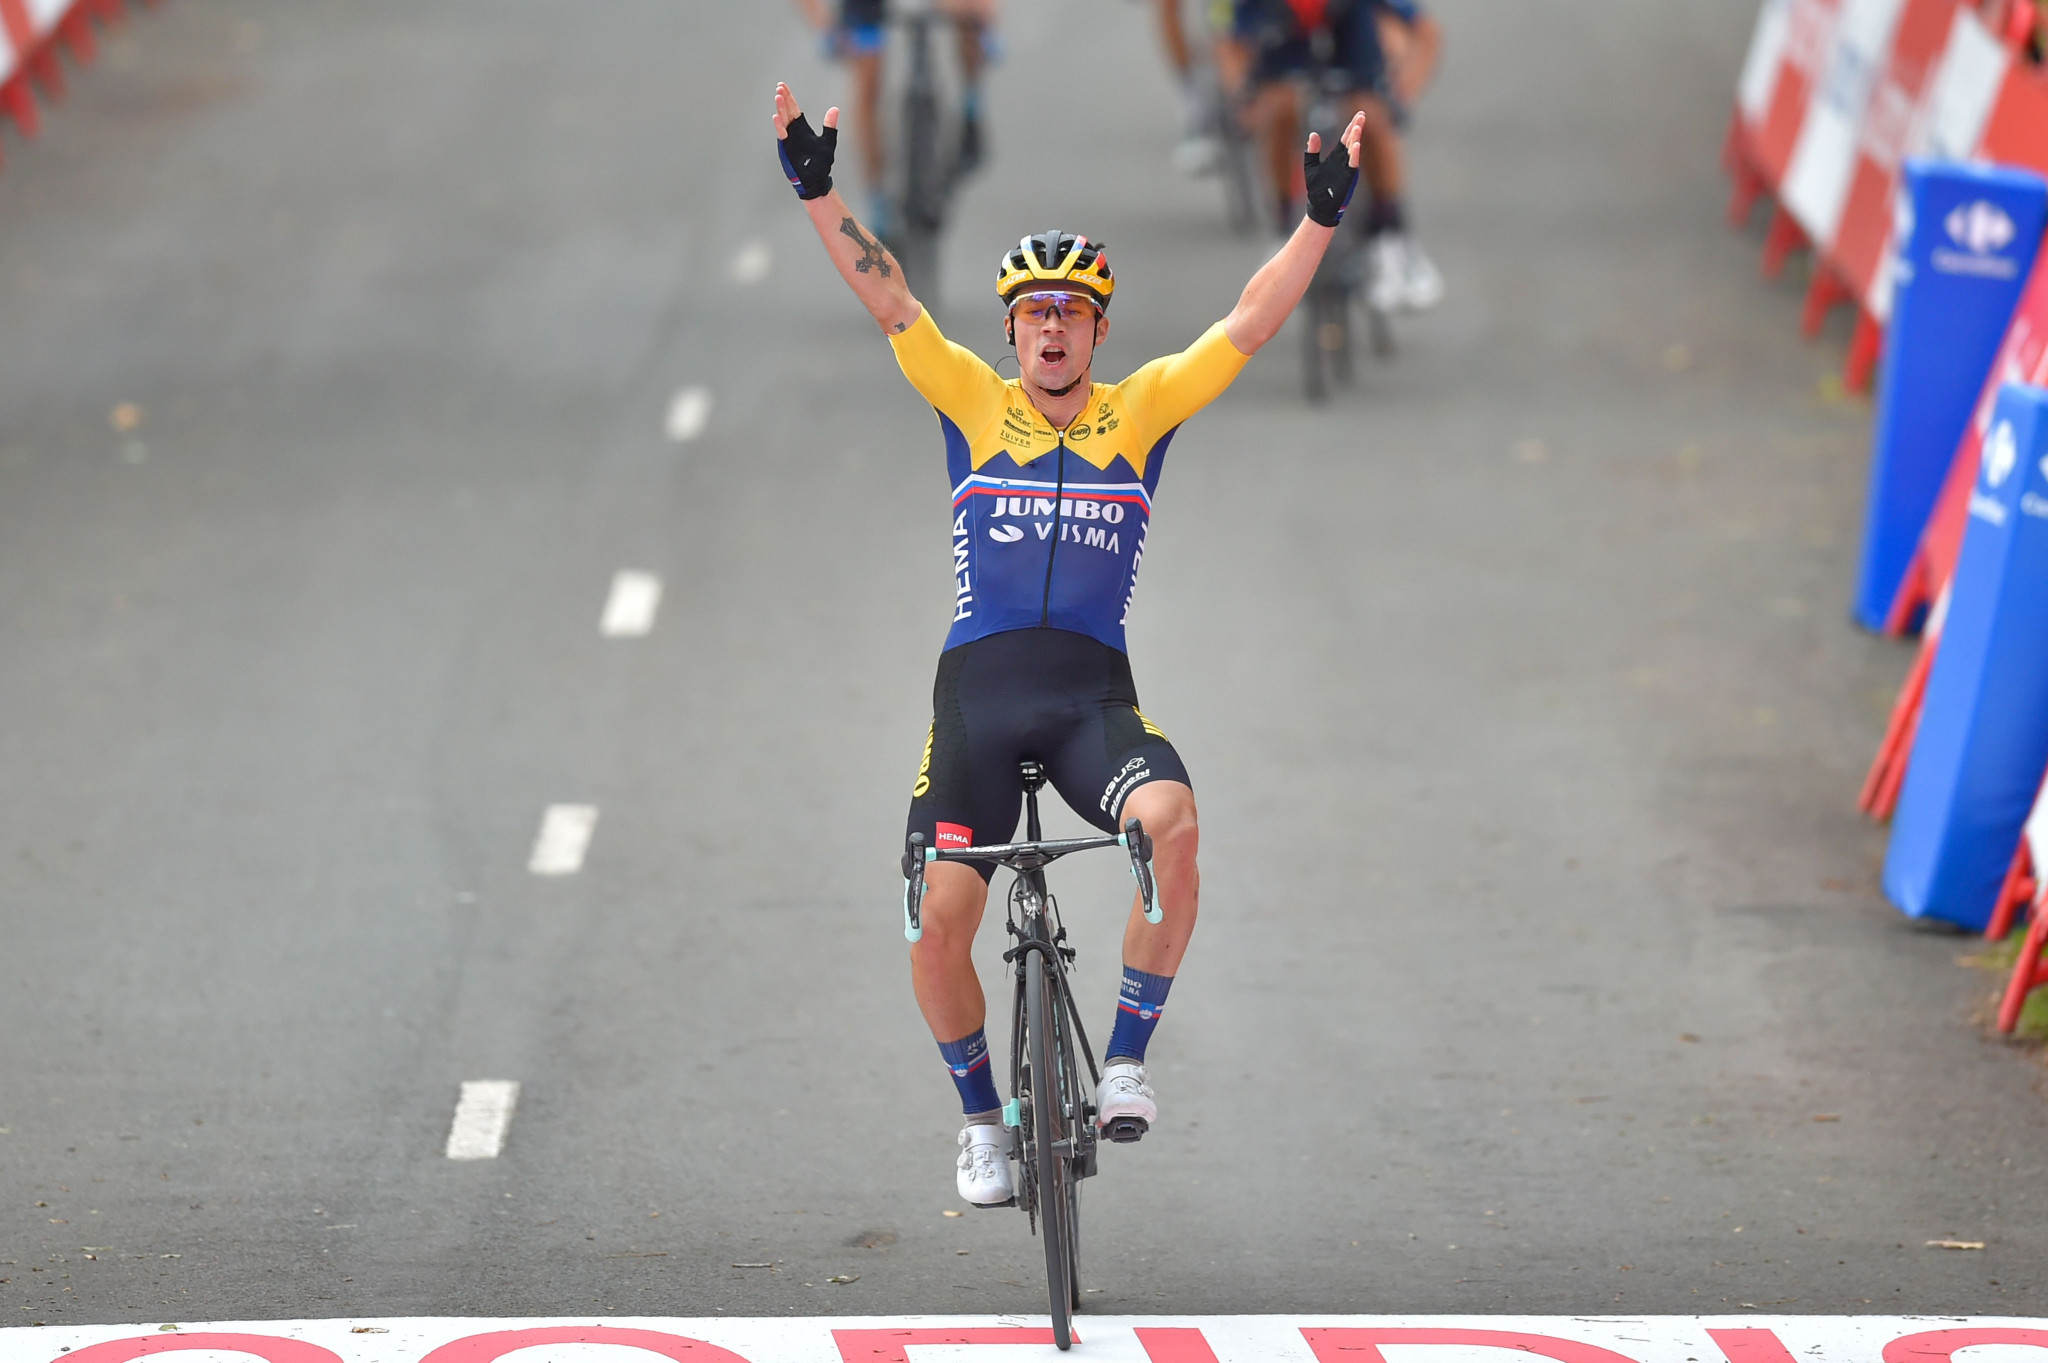 Slovenia’s Primož Roglič has won the past three editions of the Vuelta a España ©Getty Images